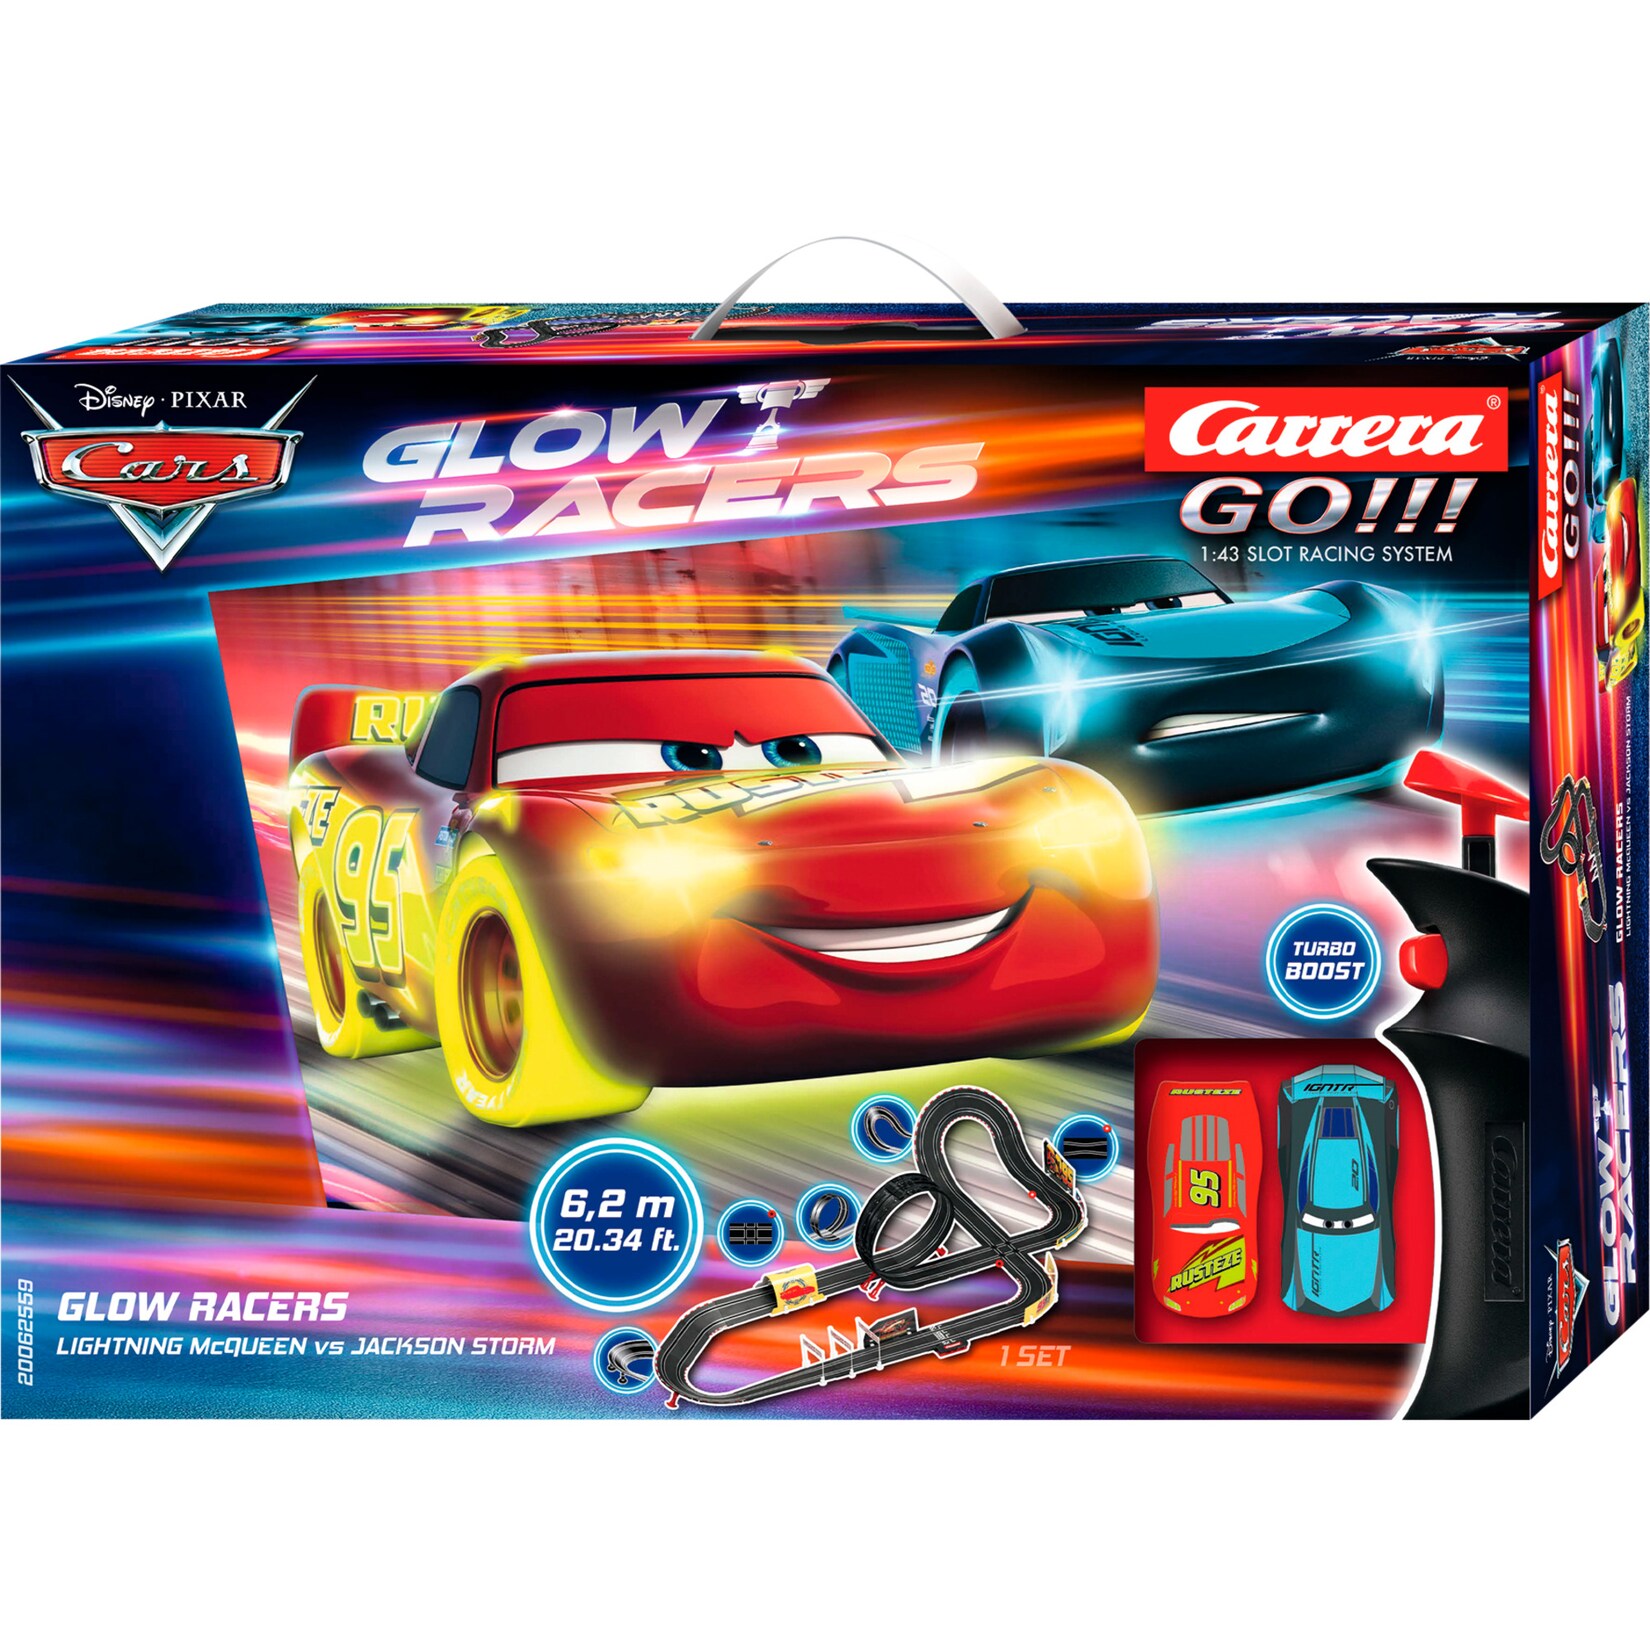 Carrera Rennbahn GO!!! Disney·Pixar Cars - Glow Racers